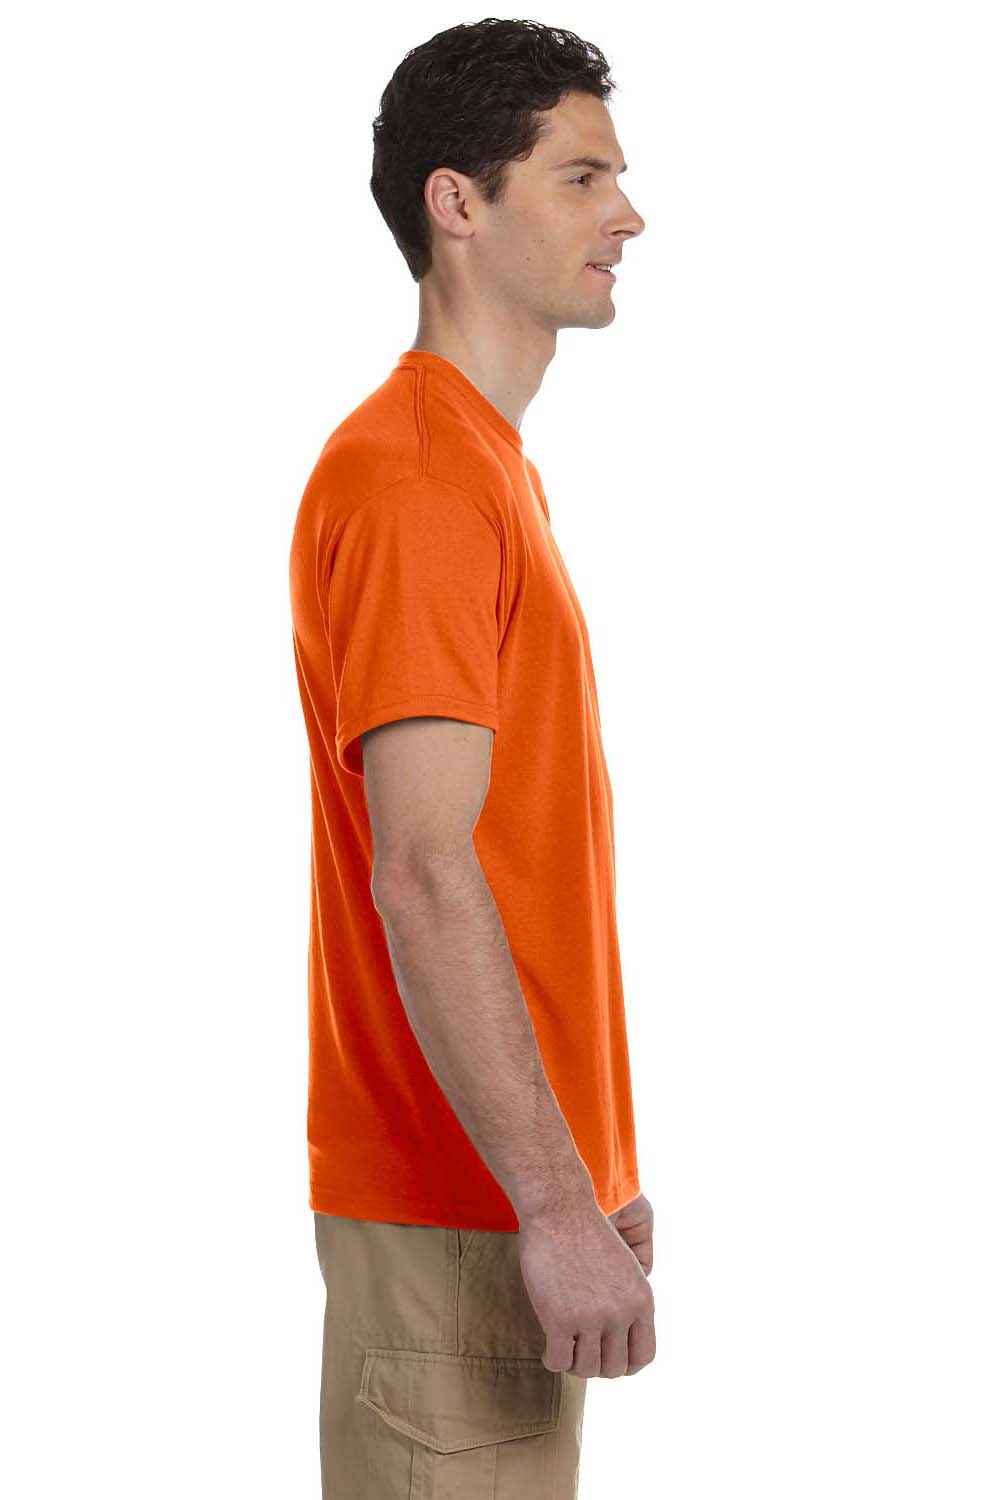 Jerzees 21M Mens Dri-Power Moisture Wicking Short Sleeve Crewneck T-Shirt Safety Orange Side